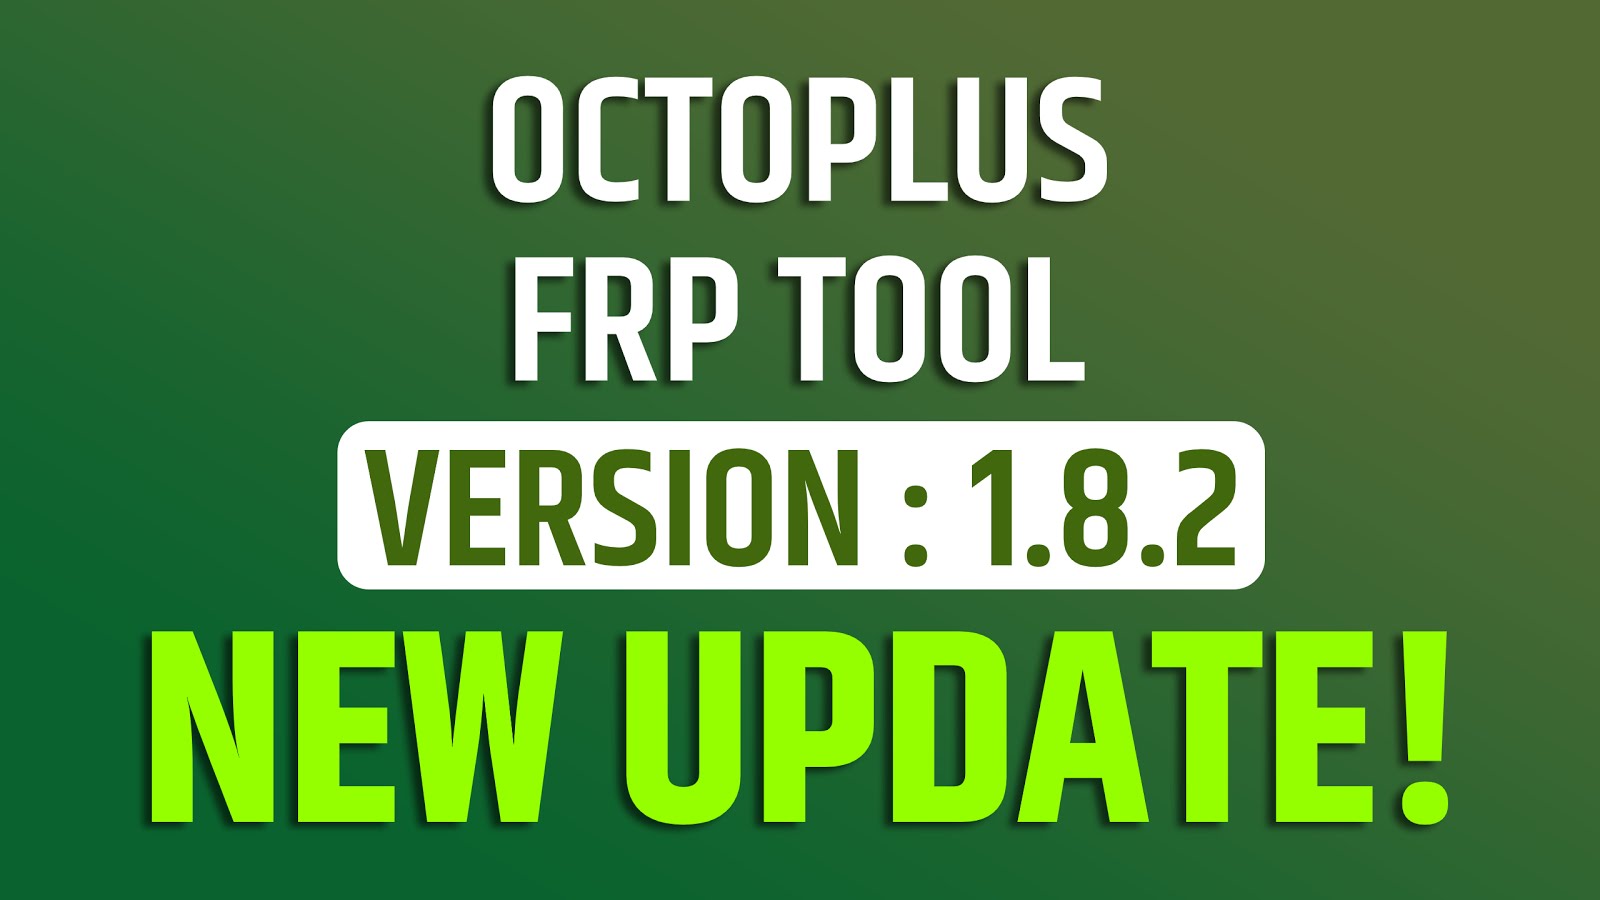 Octoplus frp tool